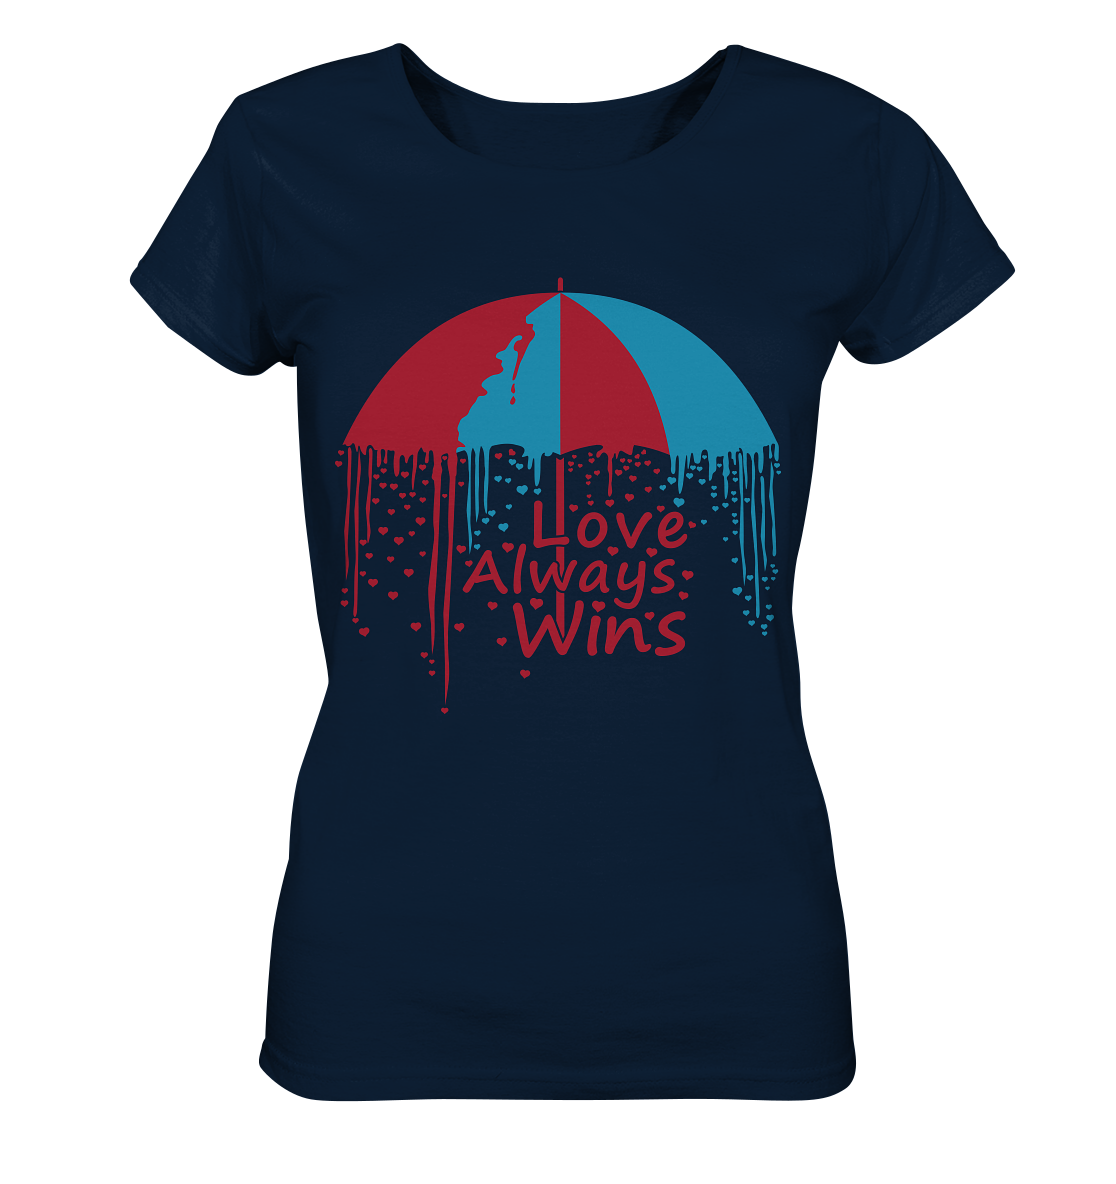 Love always wins - Ladies Organic Shirt